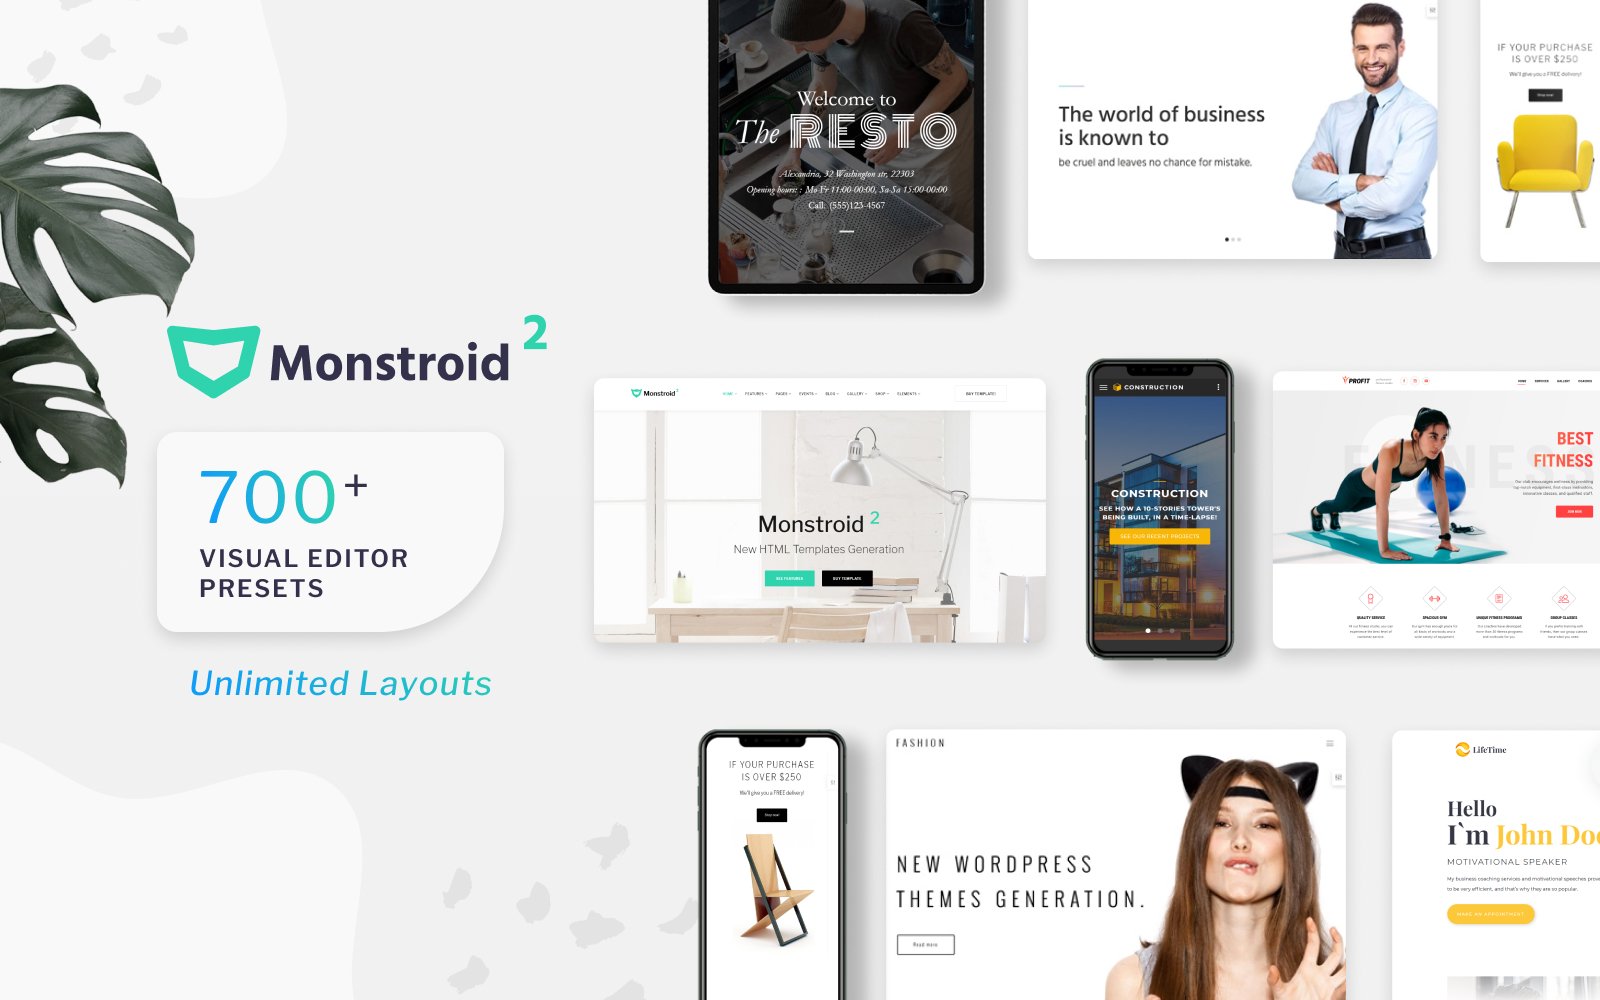 Monstroid2 - Multipurpose Premium HTML5 Website Template